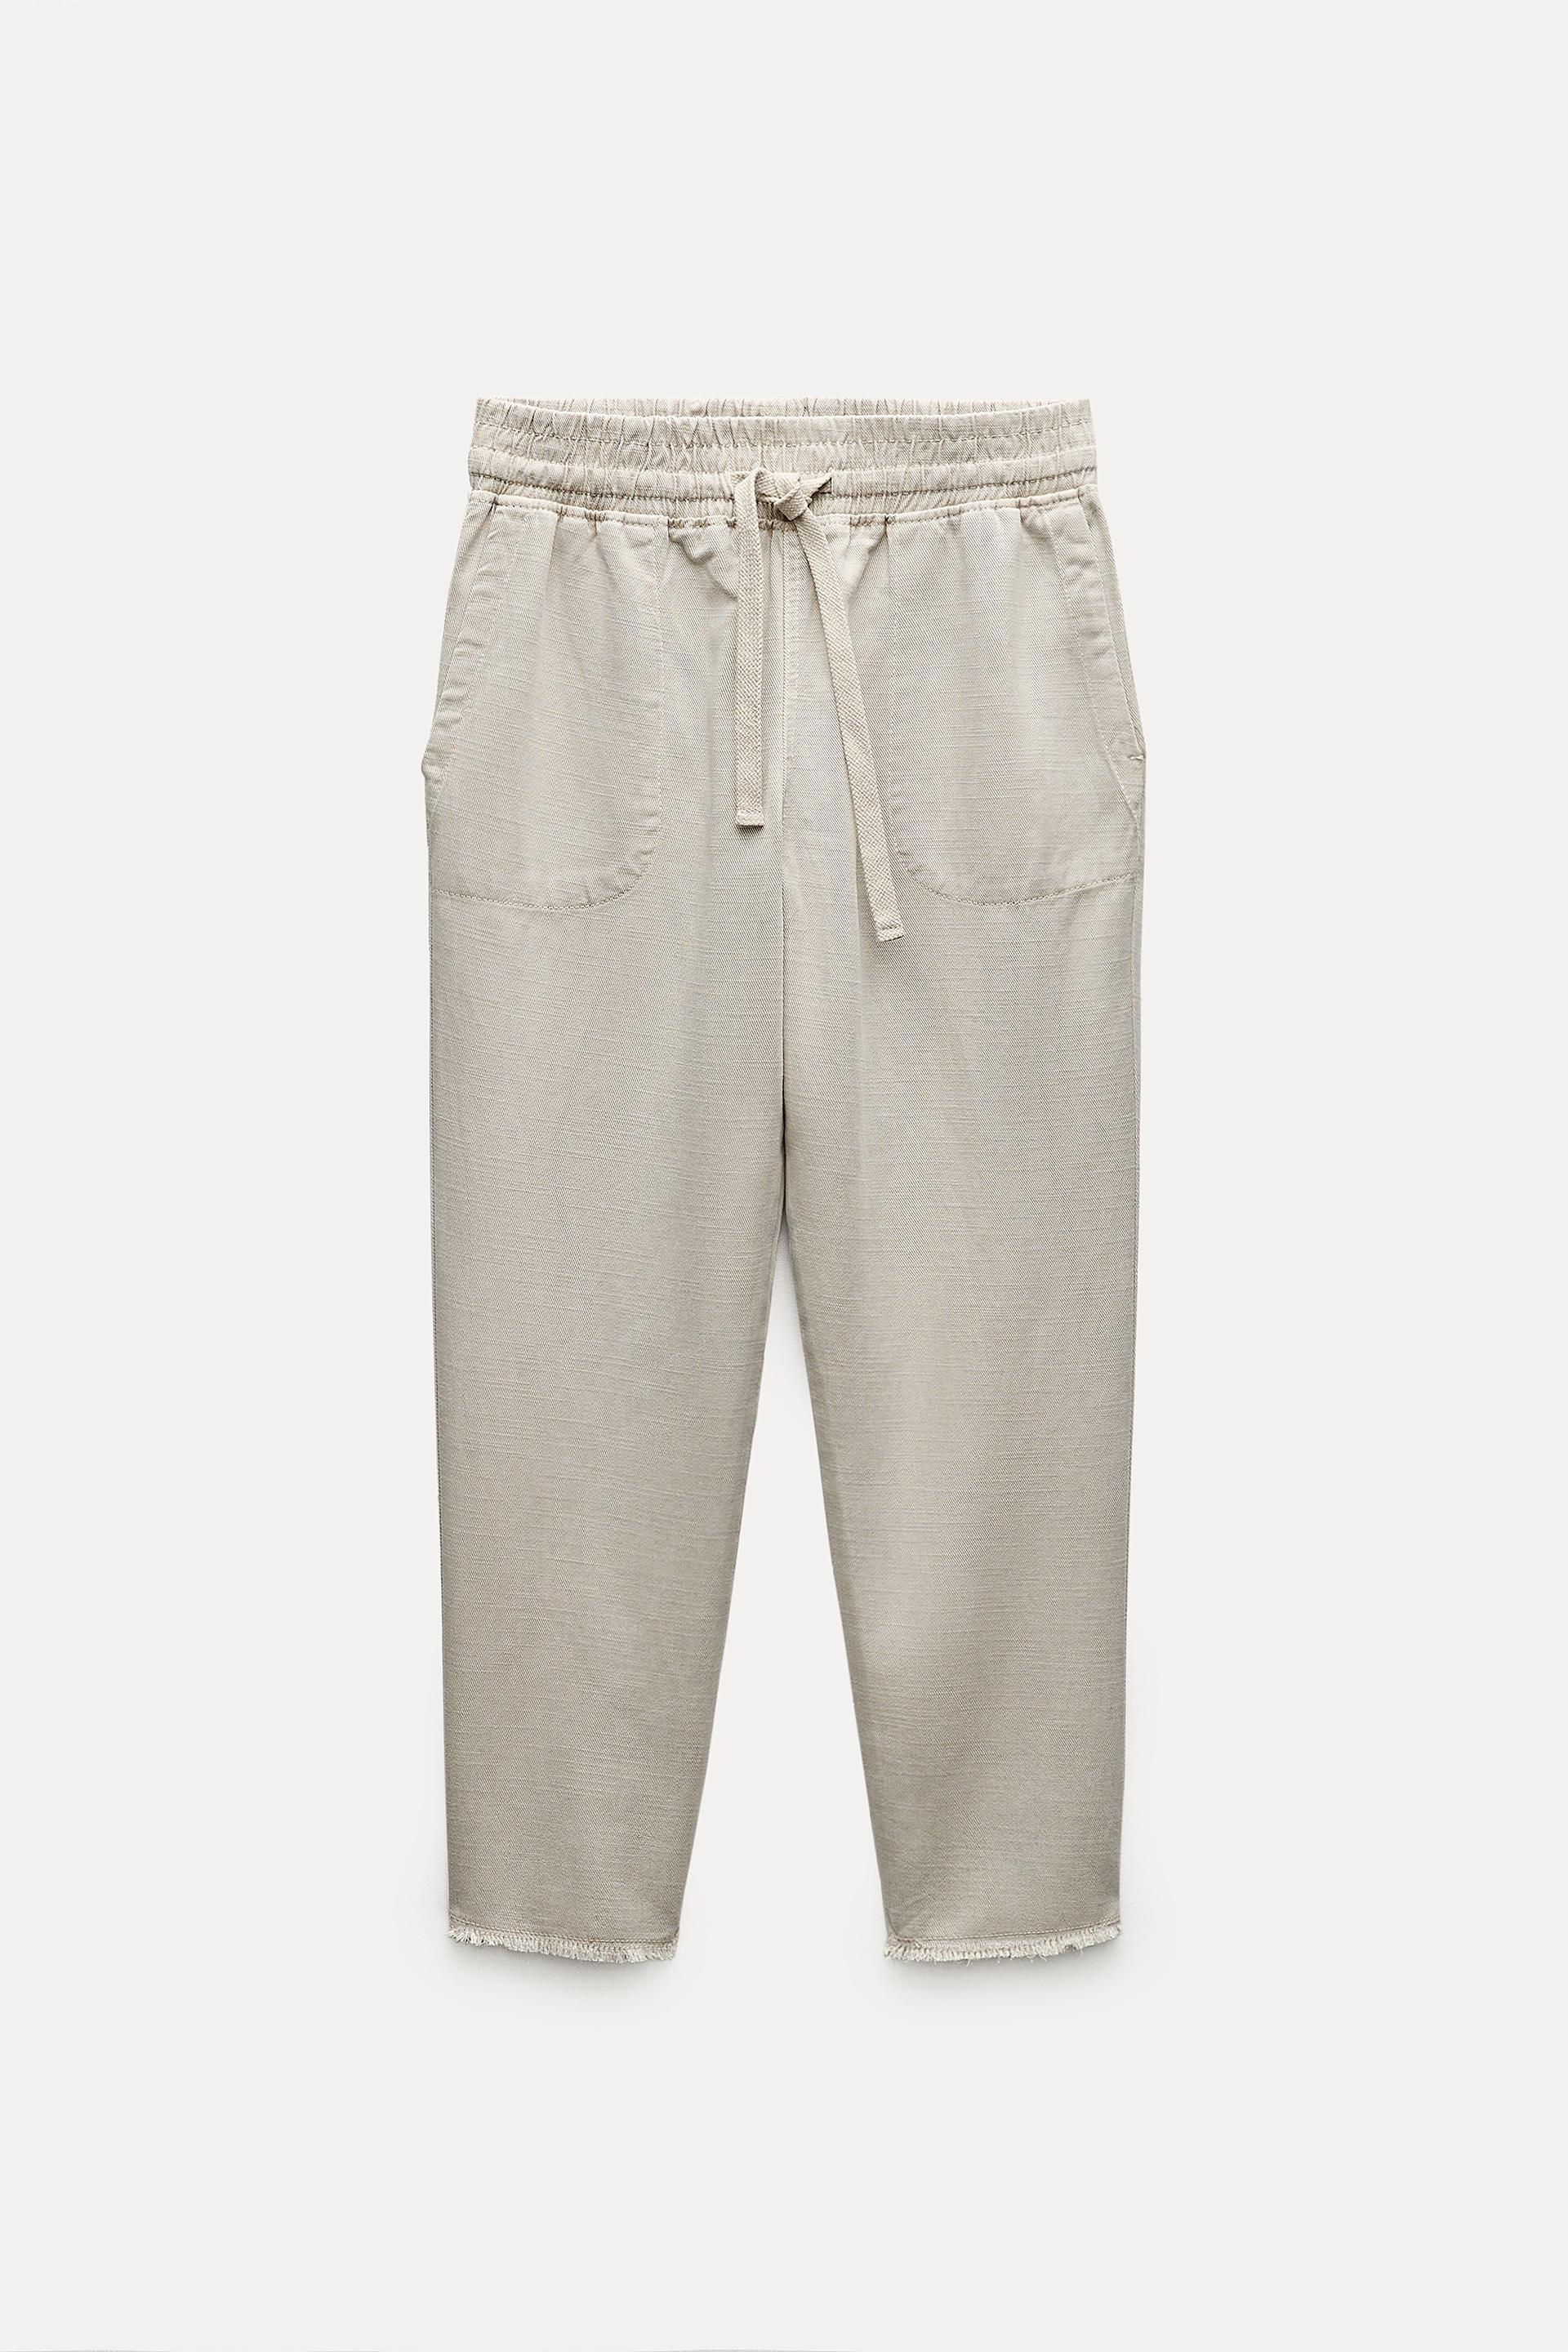 брюки zara textured pyjama style темно серый Брюки-джоггеры Zara ZW Collection Pyjama-style, песочный